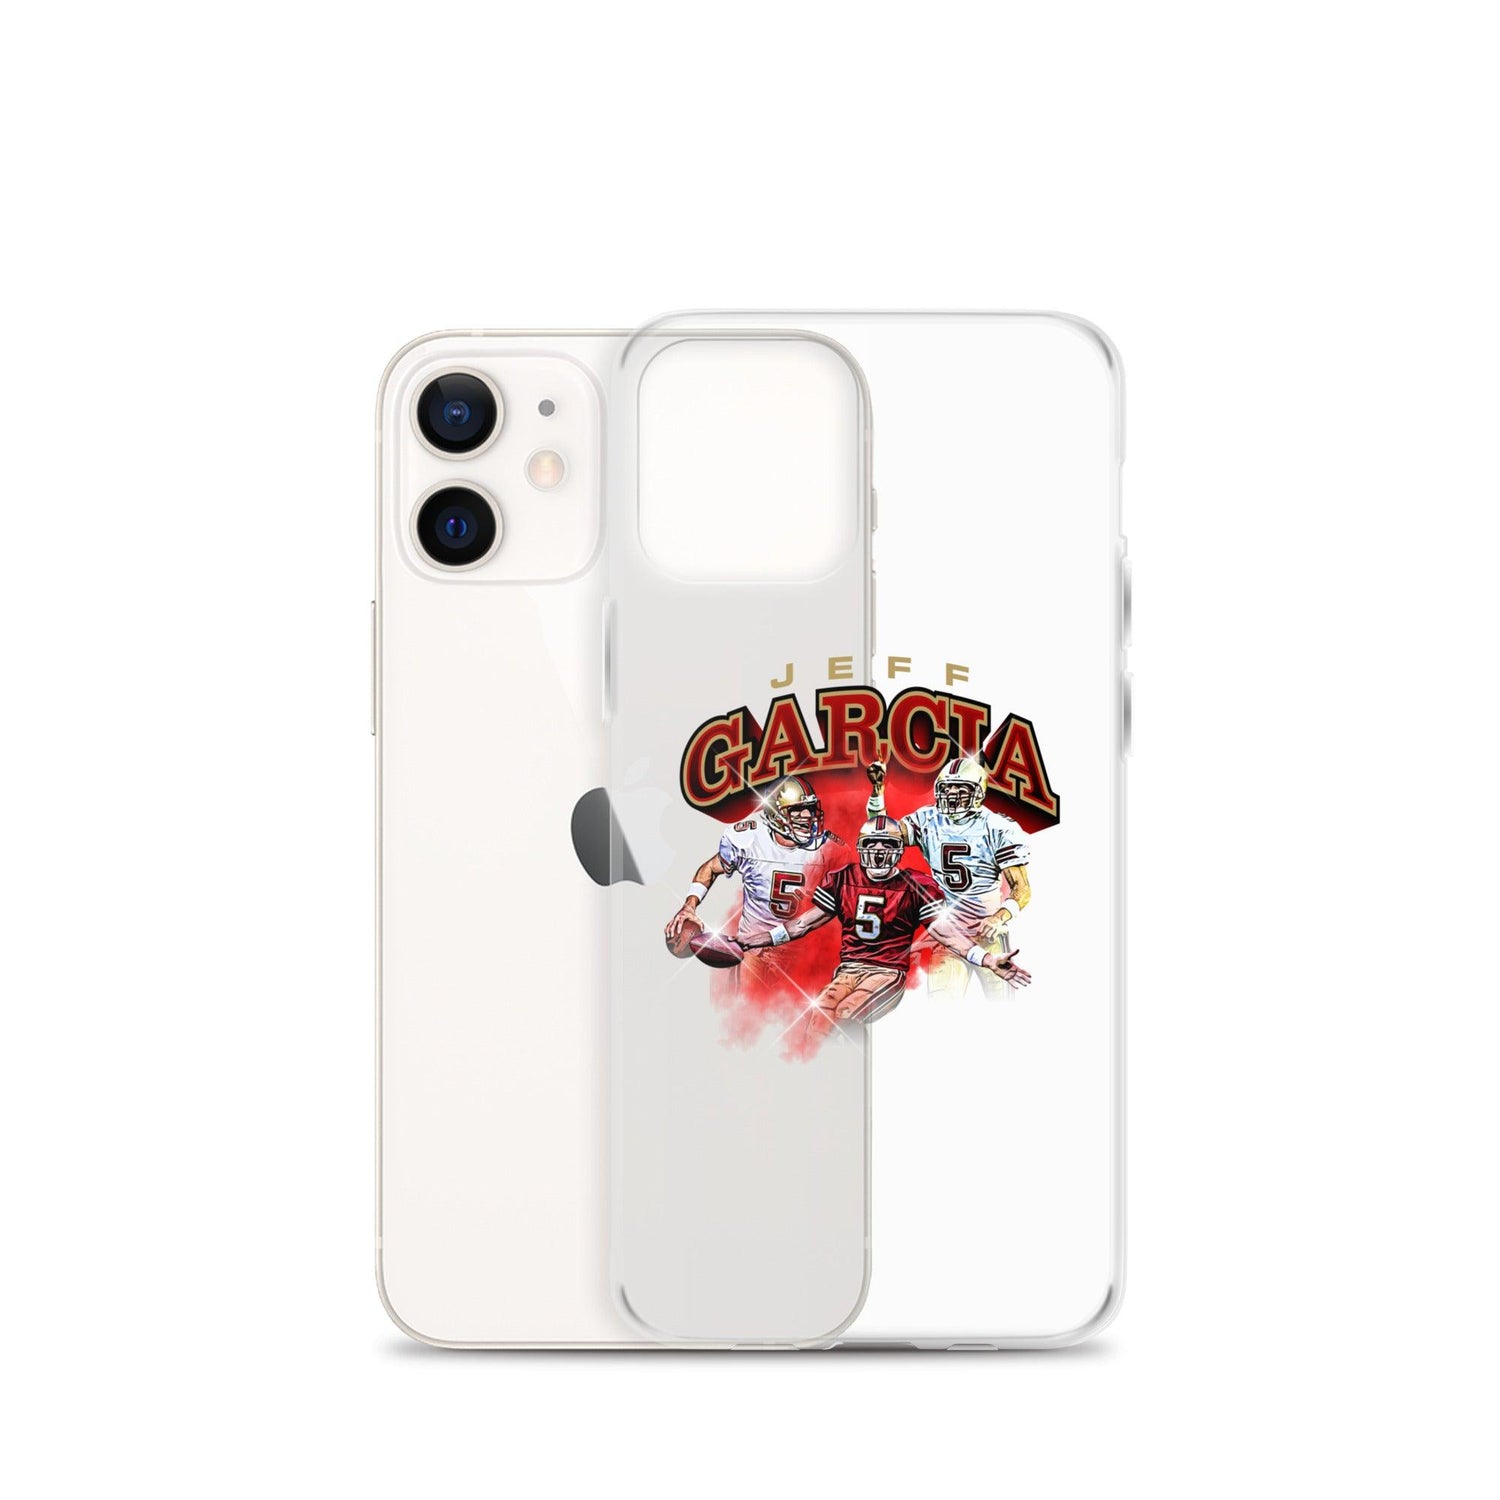 Jeff Garcia "Essential" iPhone Case - Fan Arch